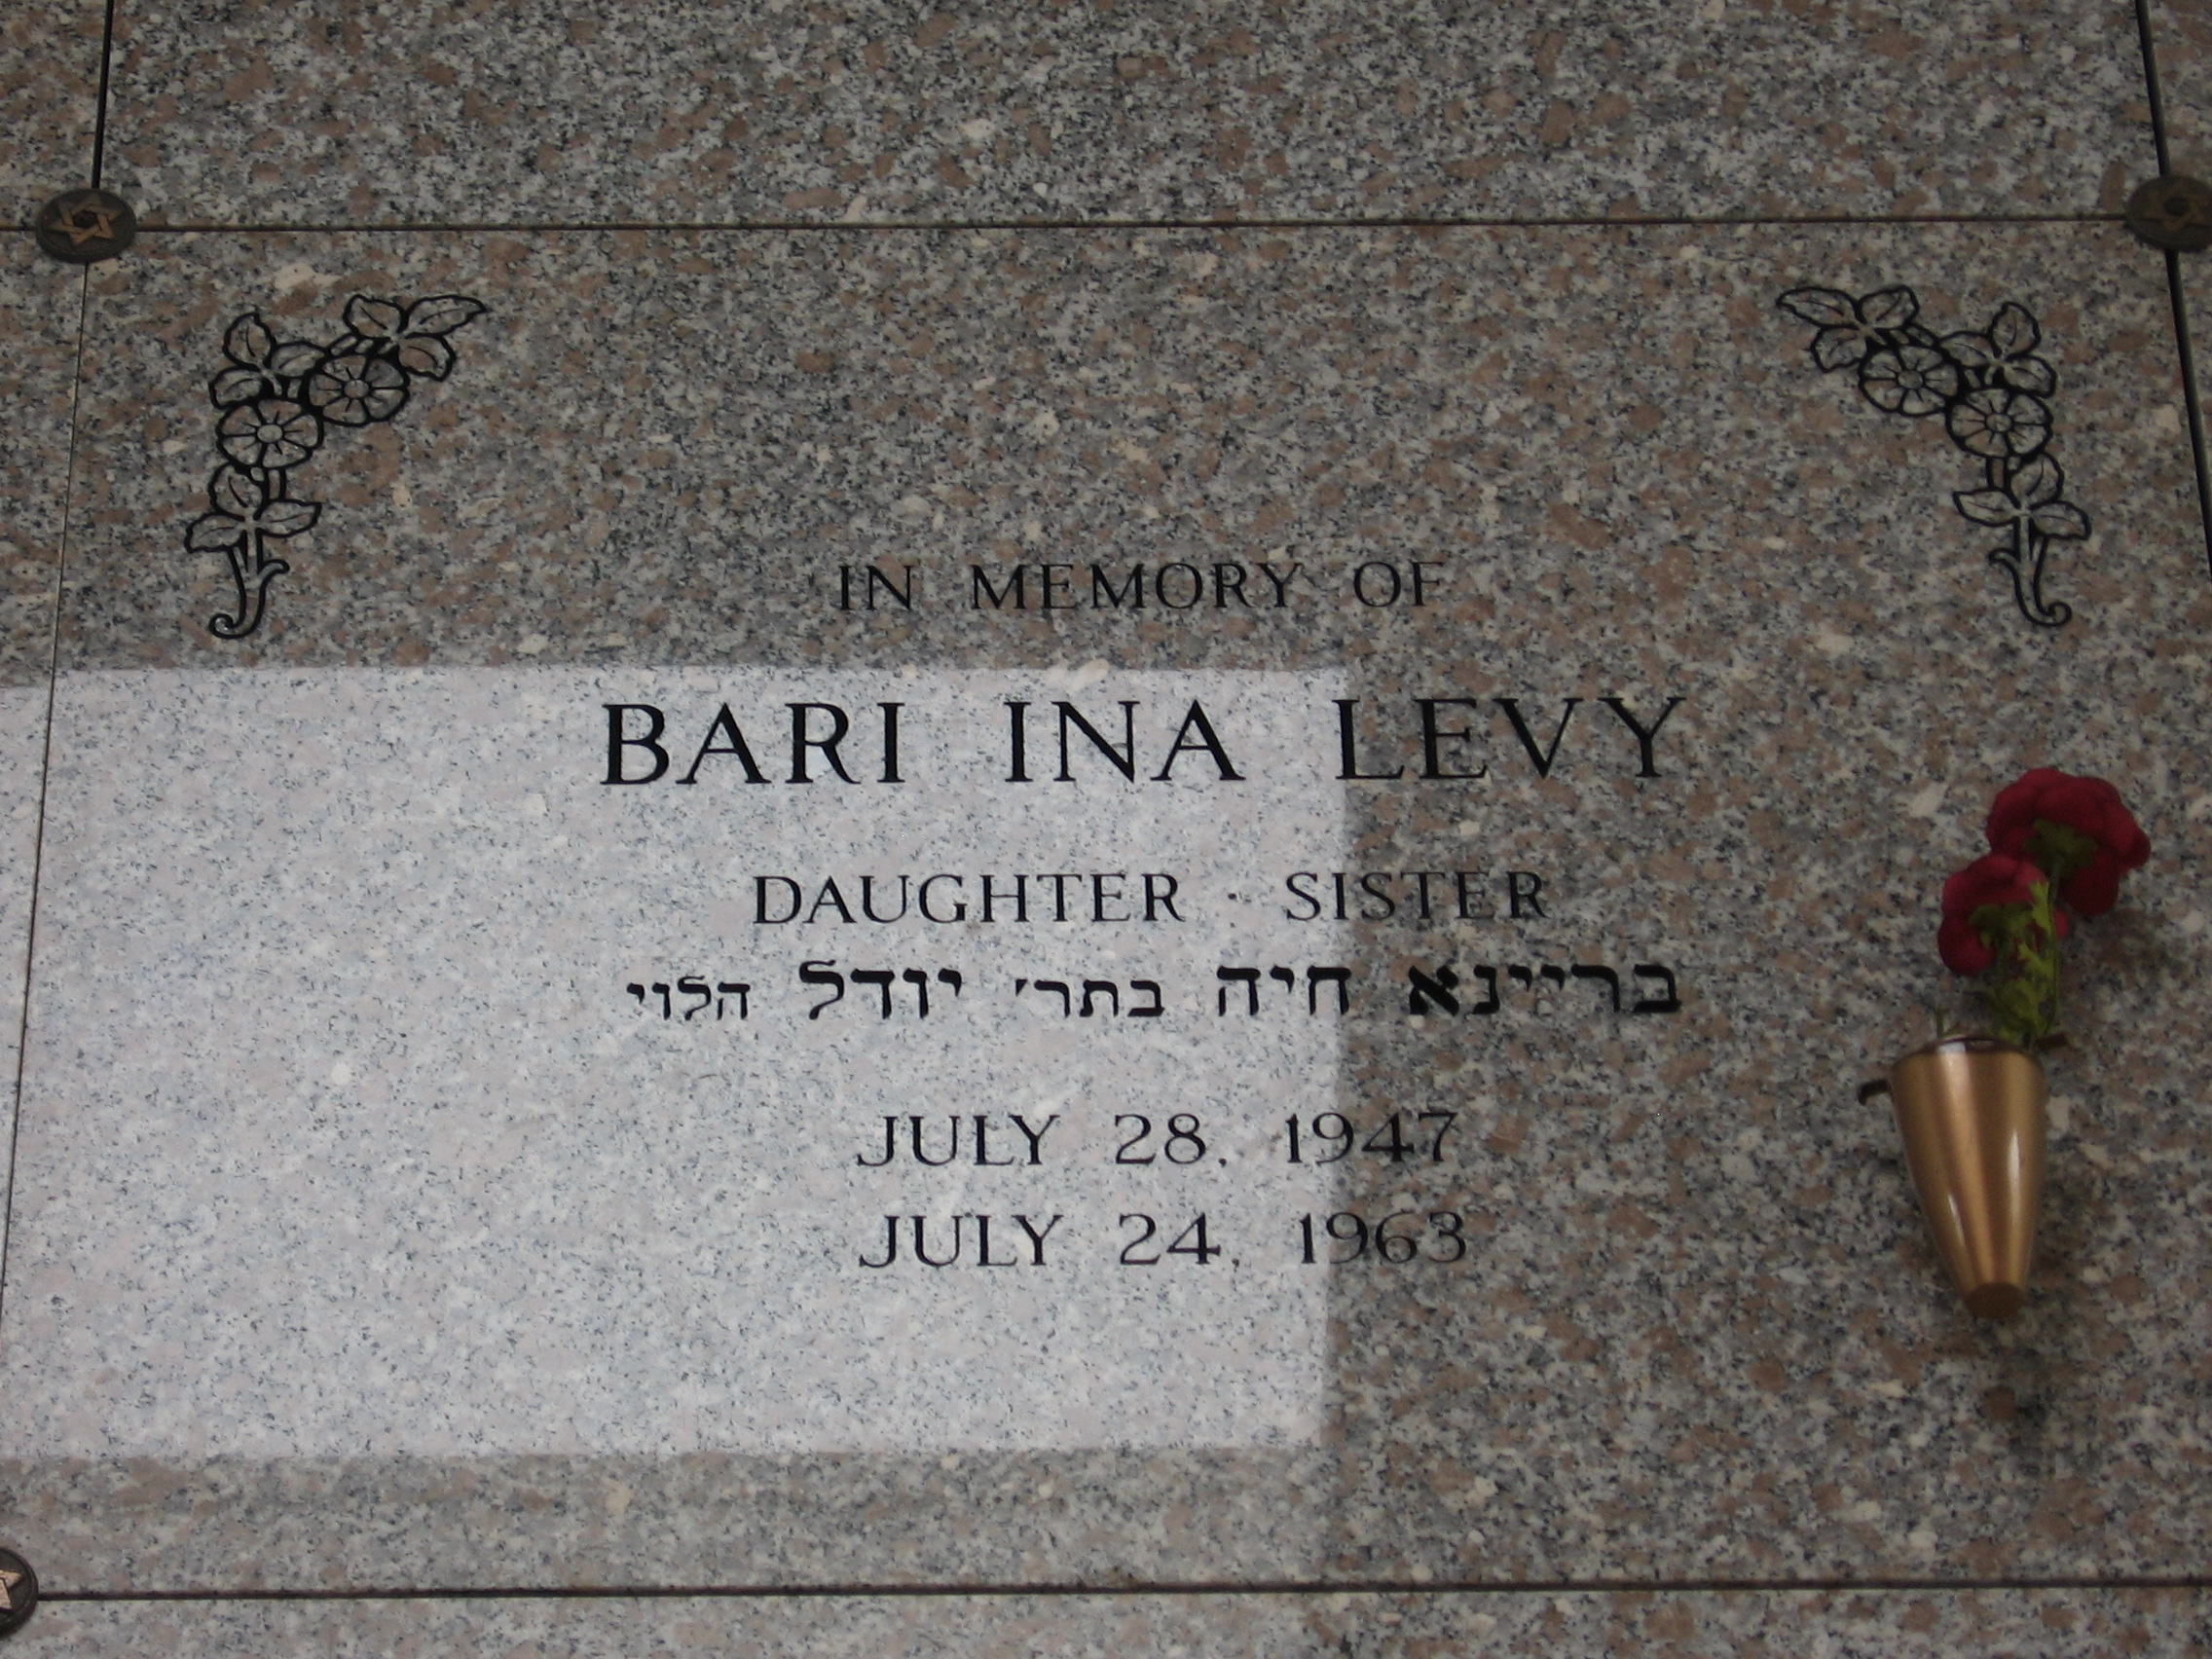 Bari Ina Levy